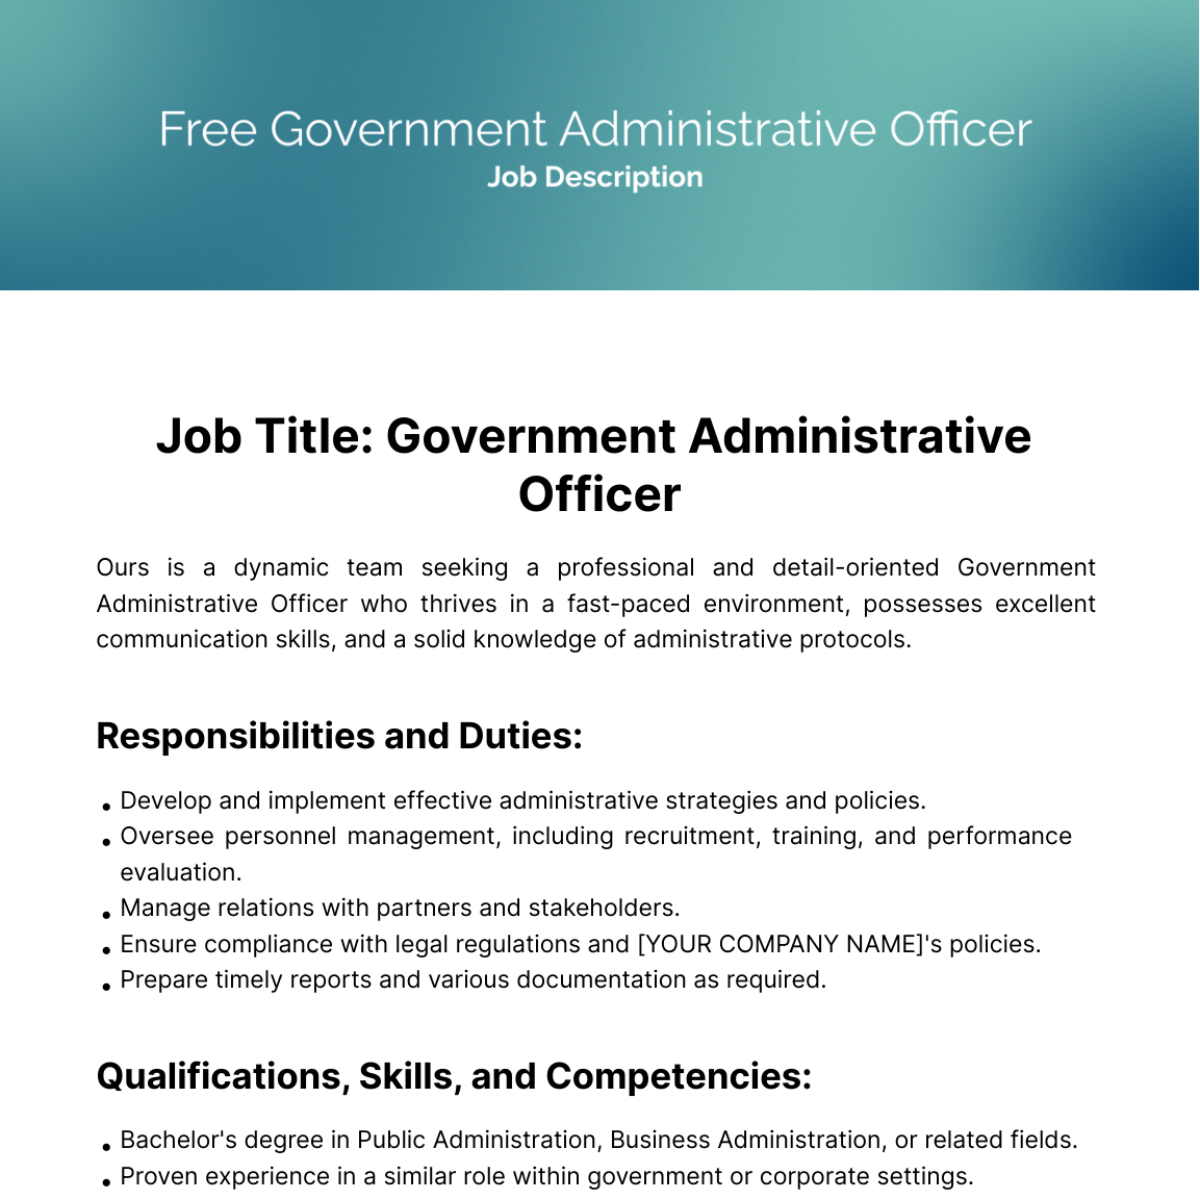 Government Administrative Officer Job Description Template